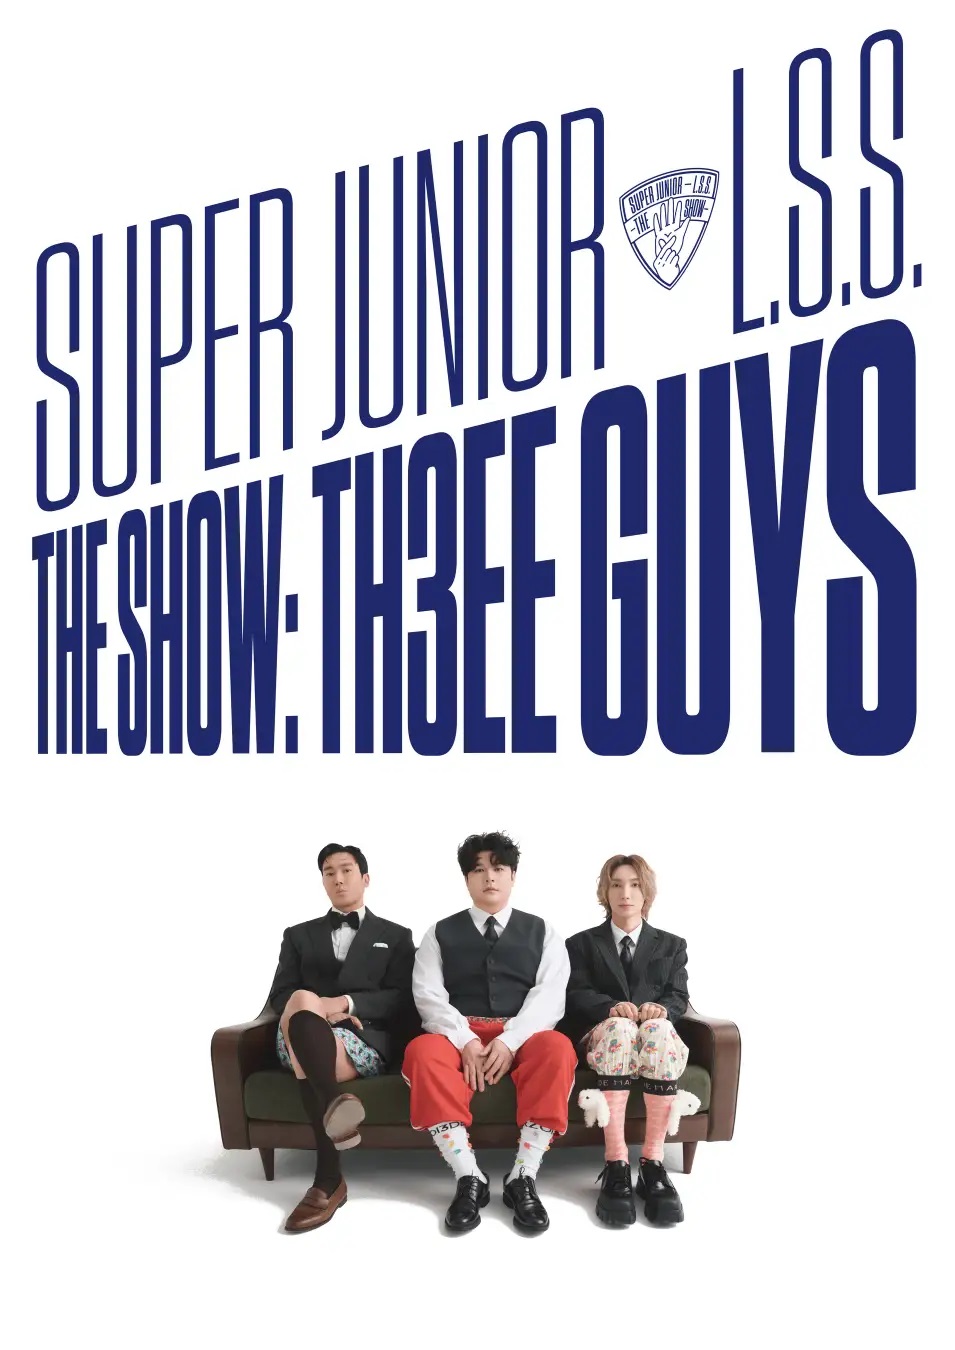 SUPER JUNIORイトゥク、シンドン、シウォンの「SUPER JUNIOR-L.S.S.」ソウル公演が生中継決定